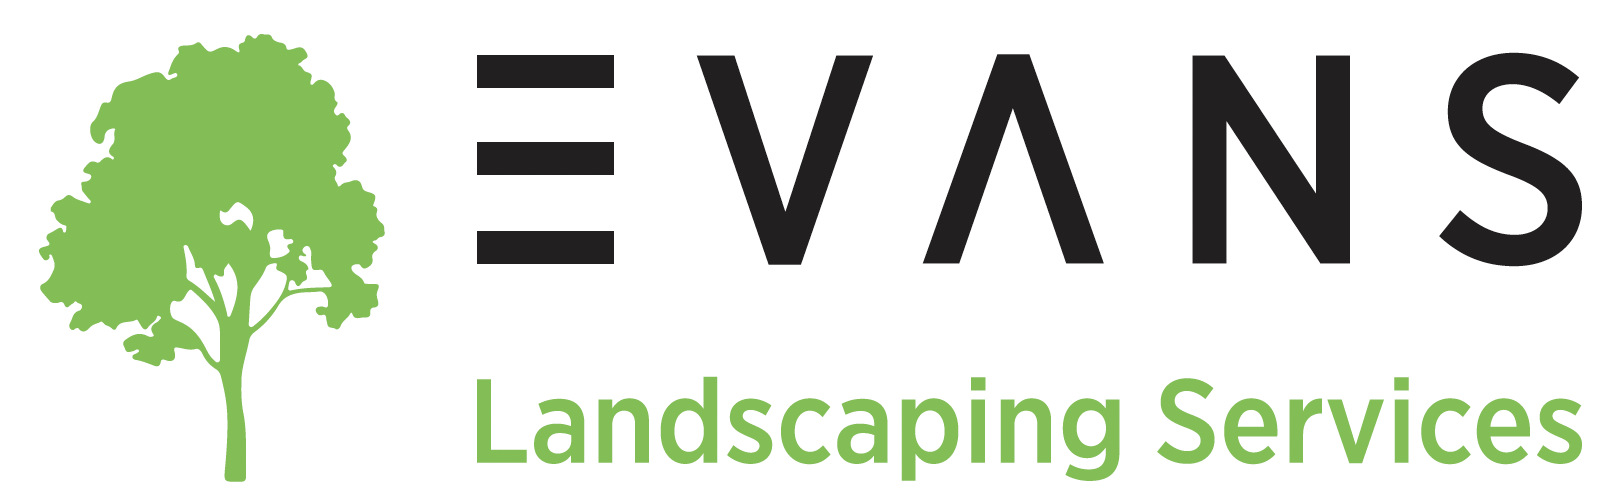 Evans Landscaping Services